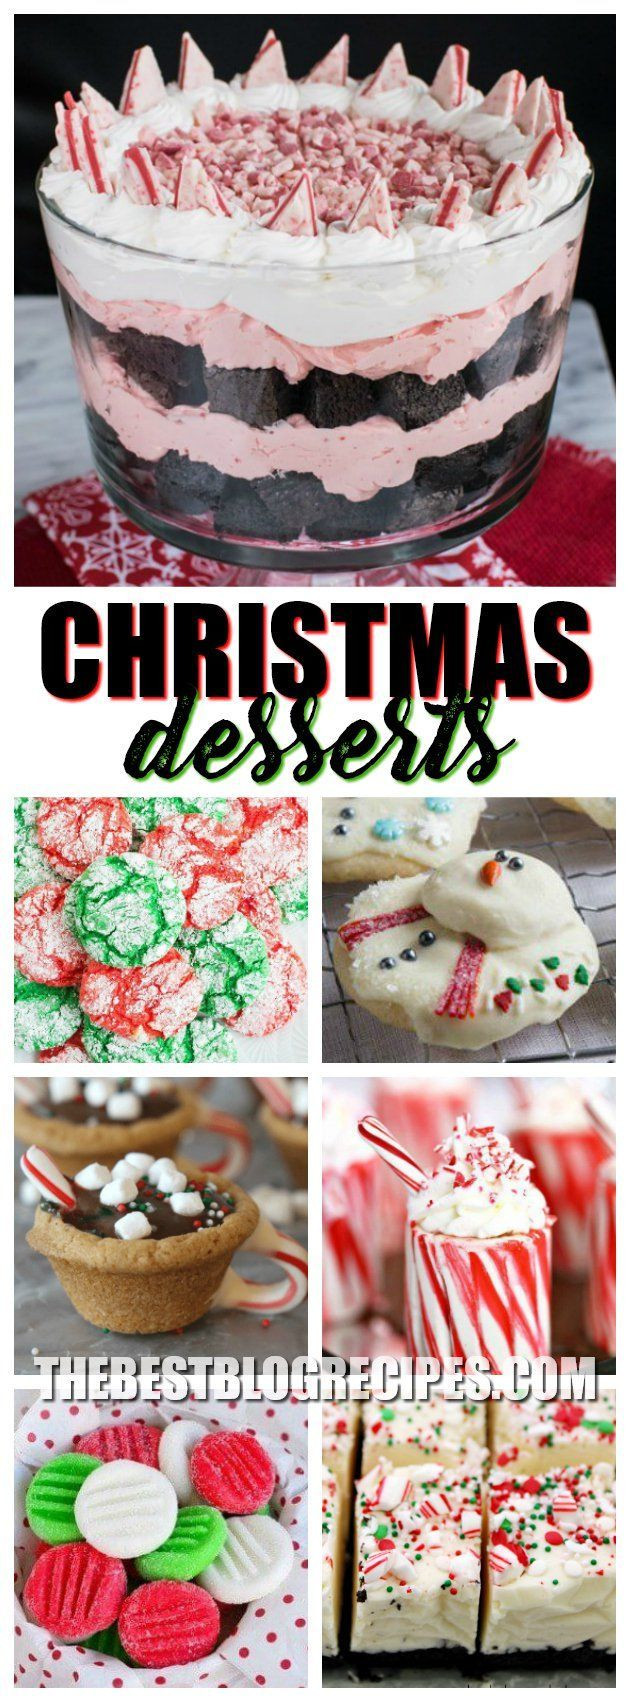 Festive Christmas Desserts
 Best 25 Traditional christmas desserts ideas on Pinterest